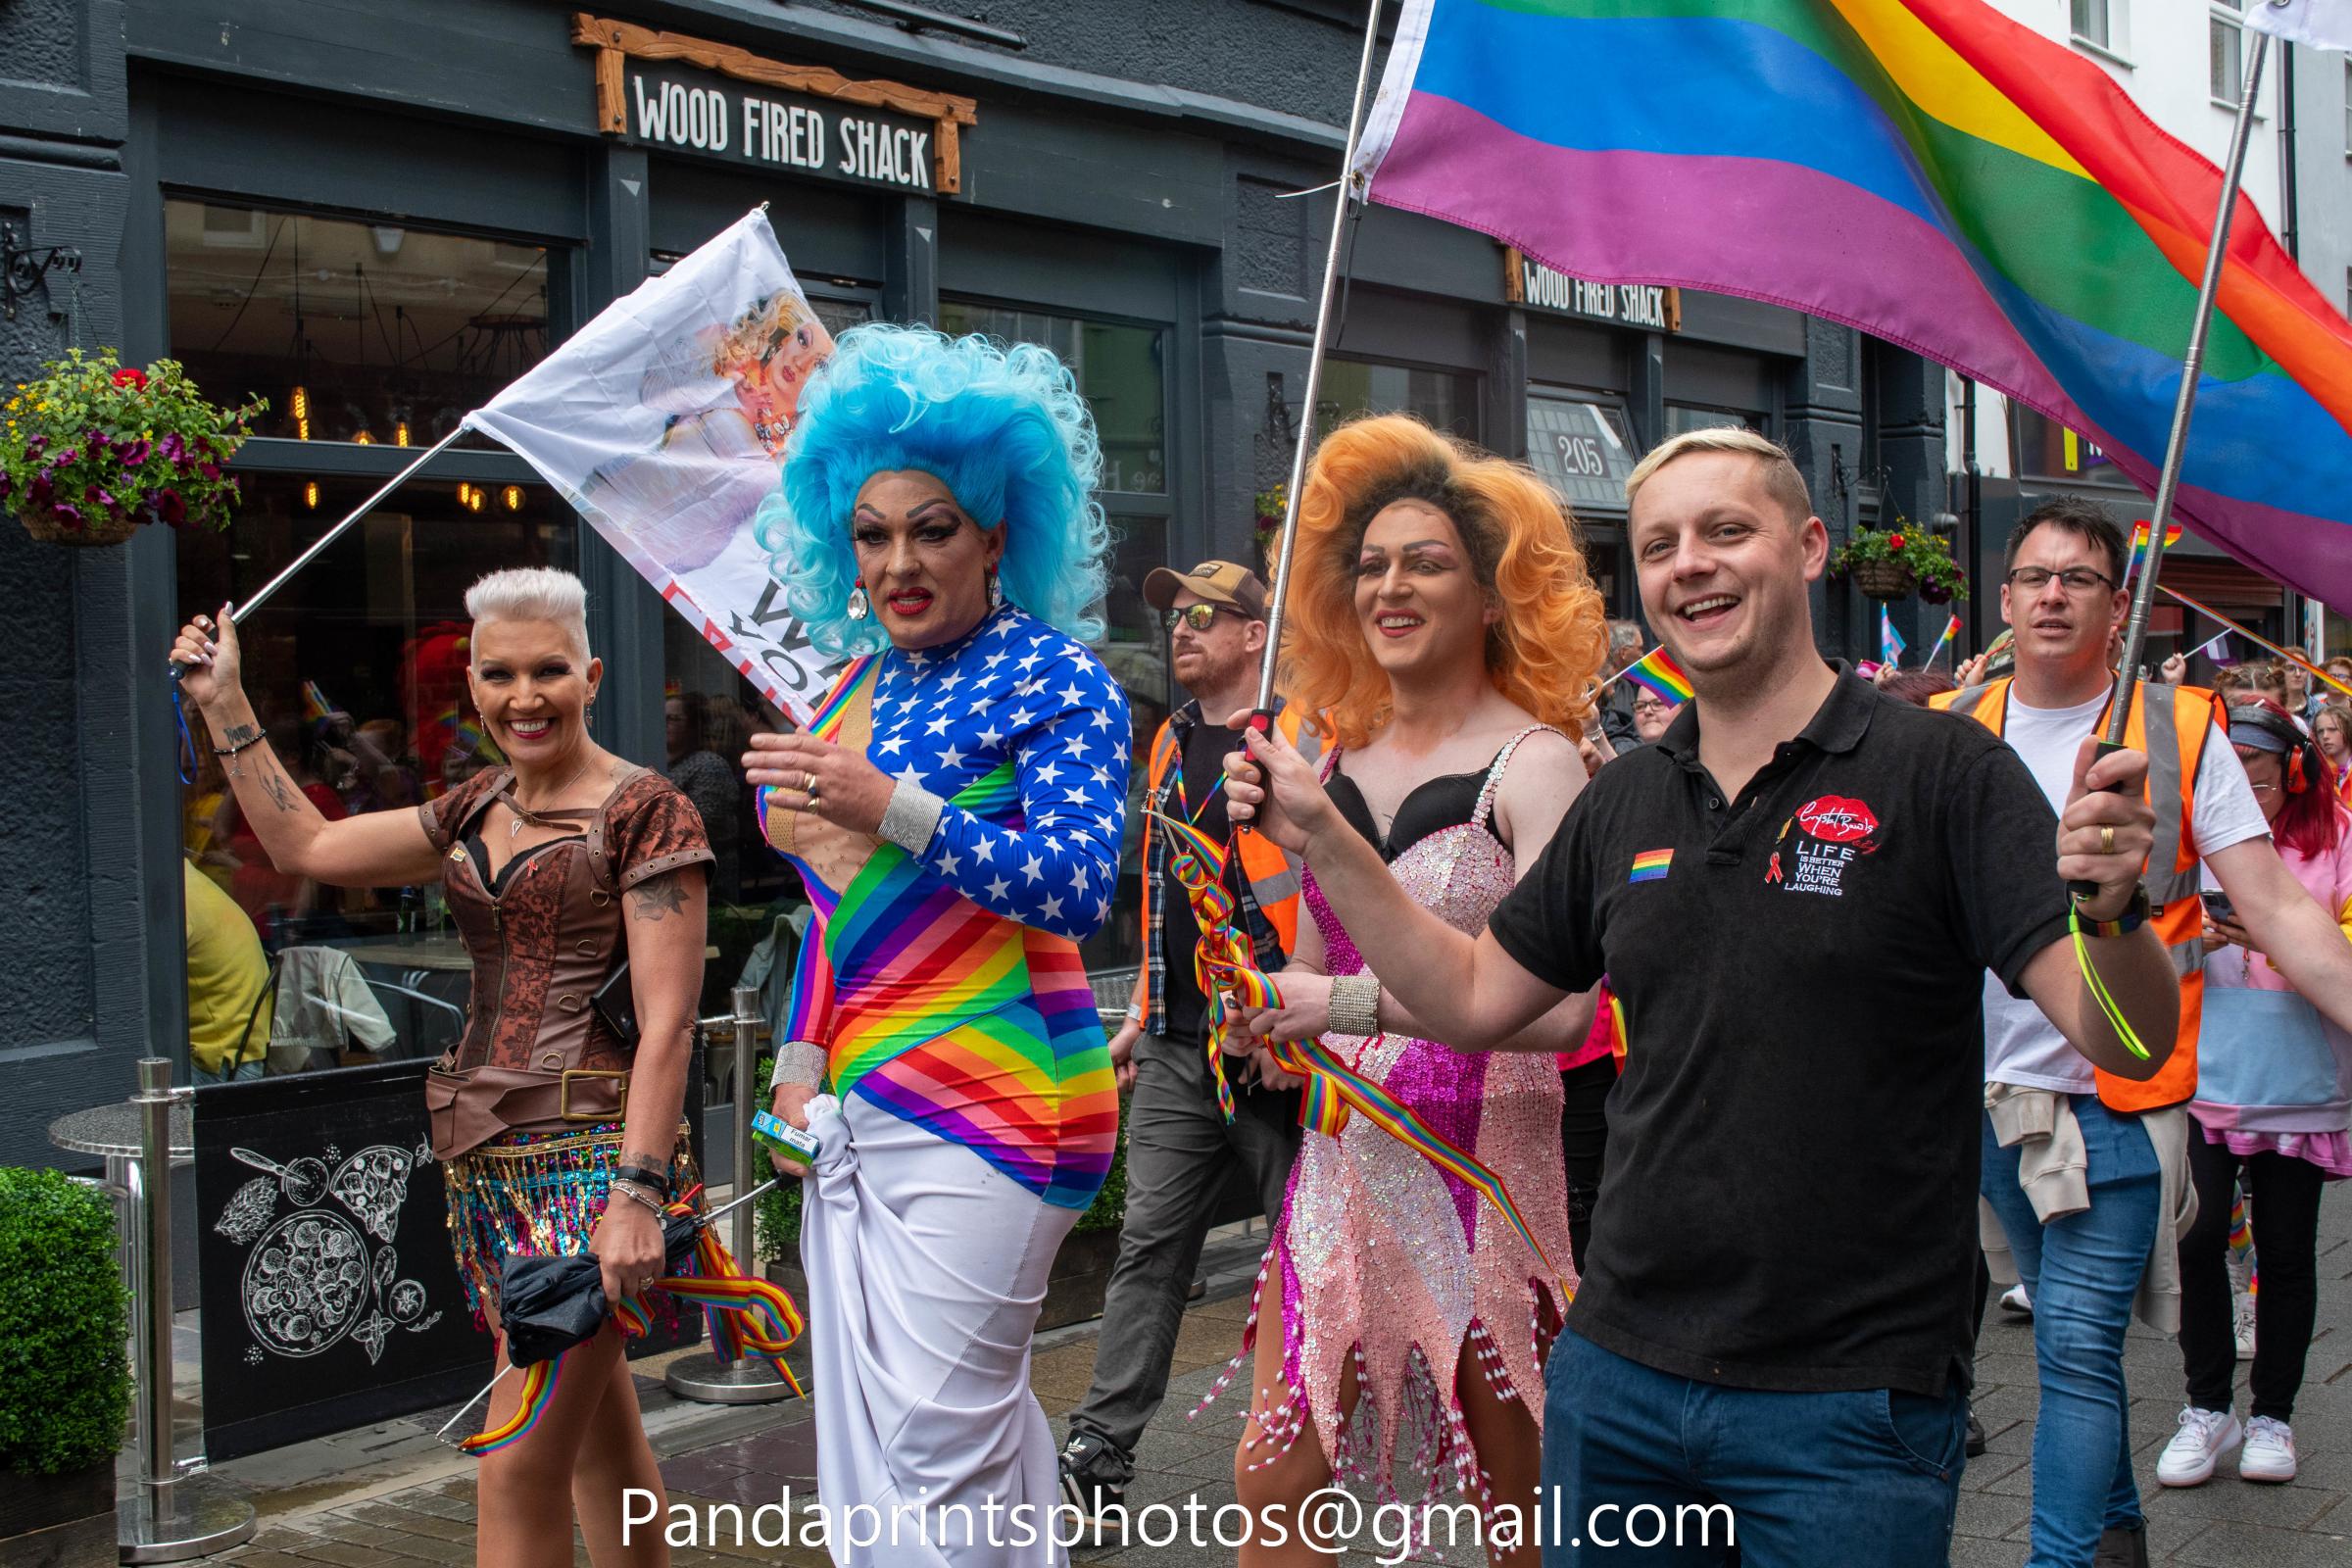 North Wales Pride in Bangor. Photo: PANDAPRINTS